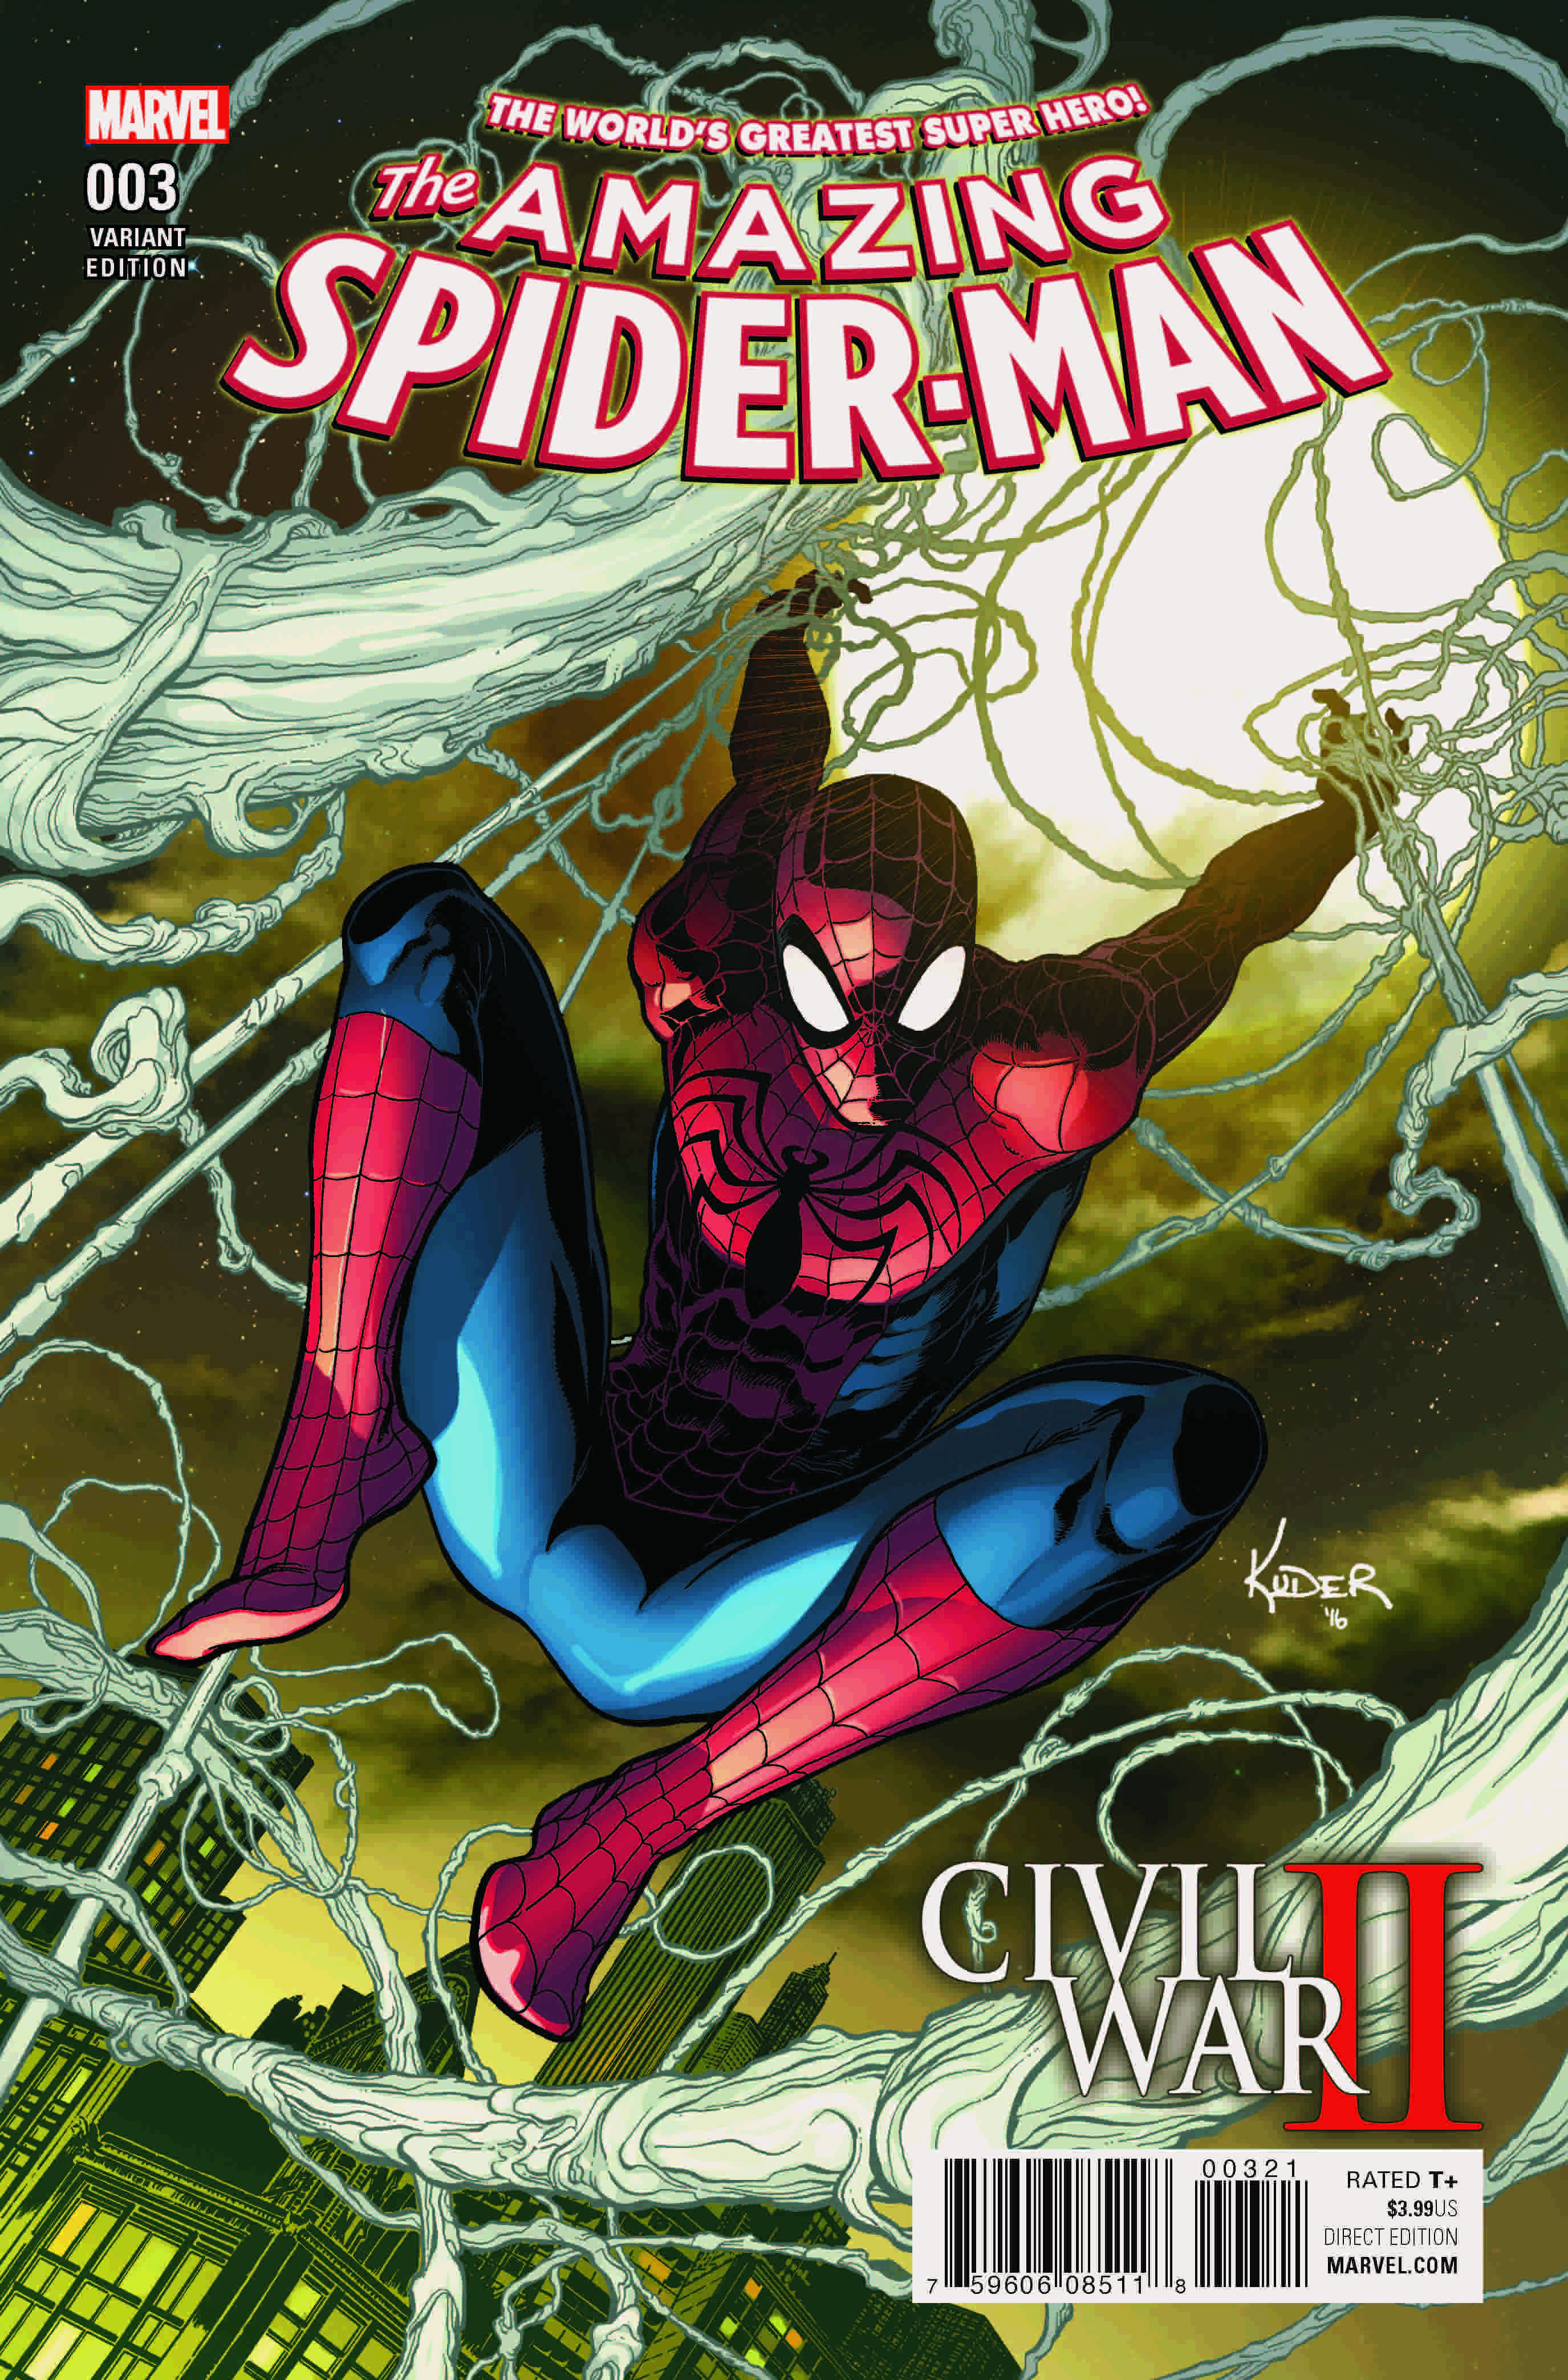 Marvel Preview: Civil War II: Amazing Spider-Man #3